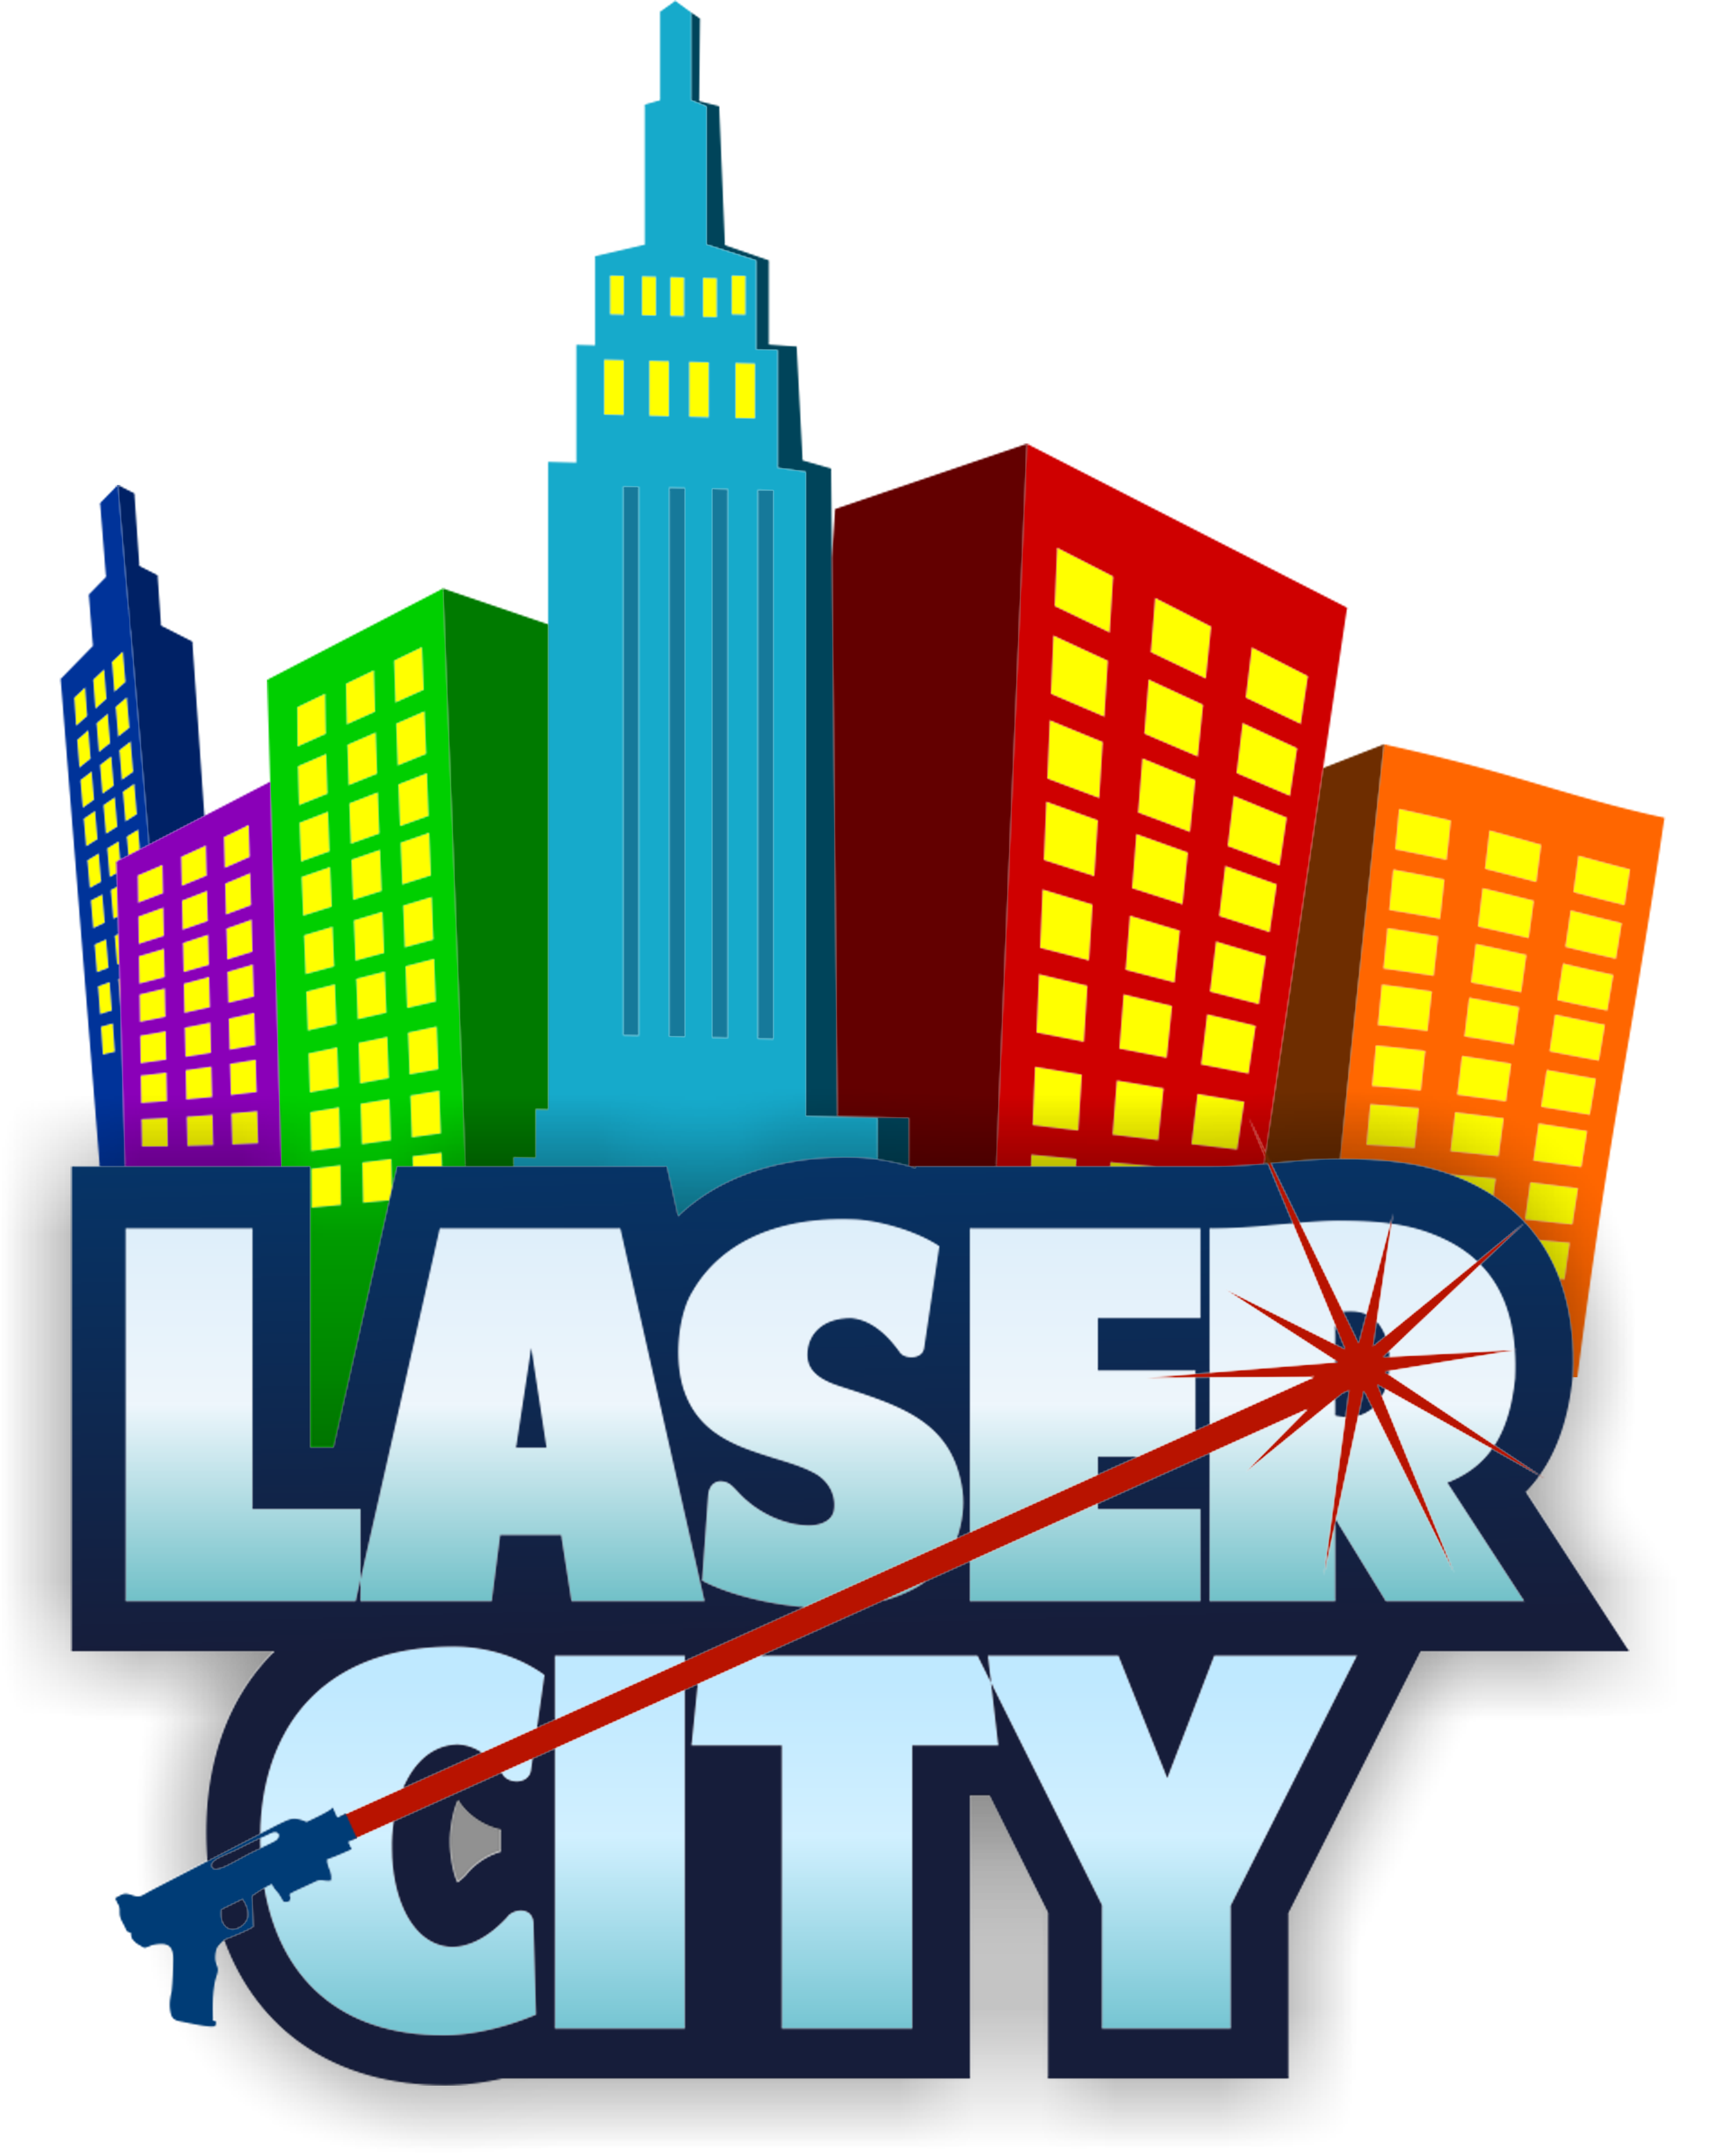 Laser-city